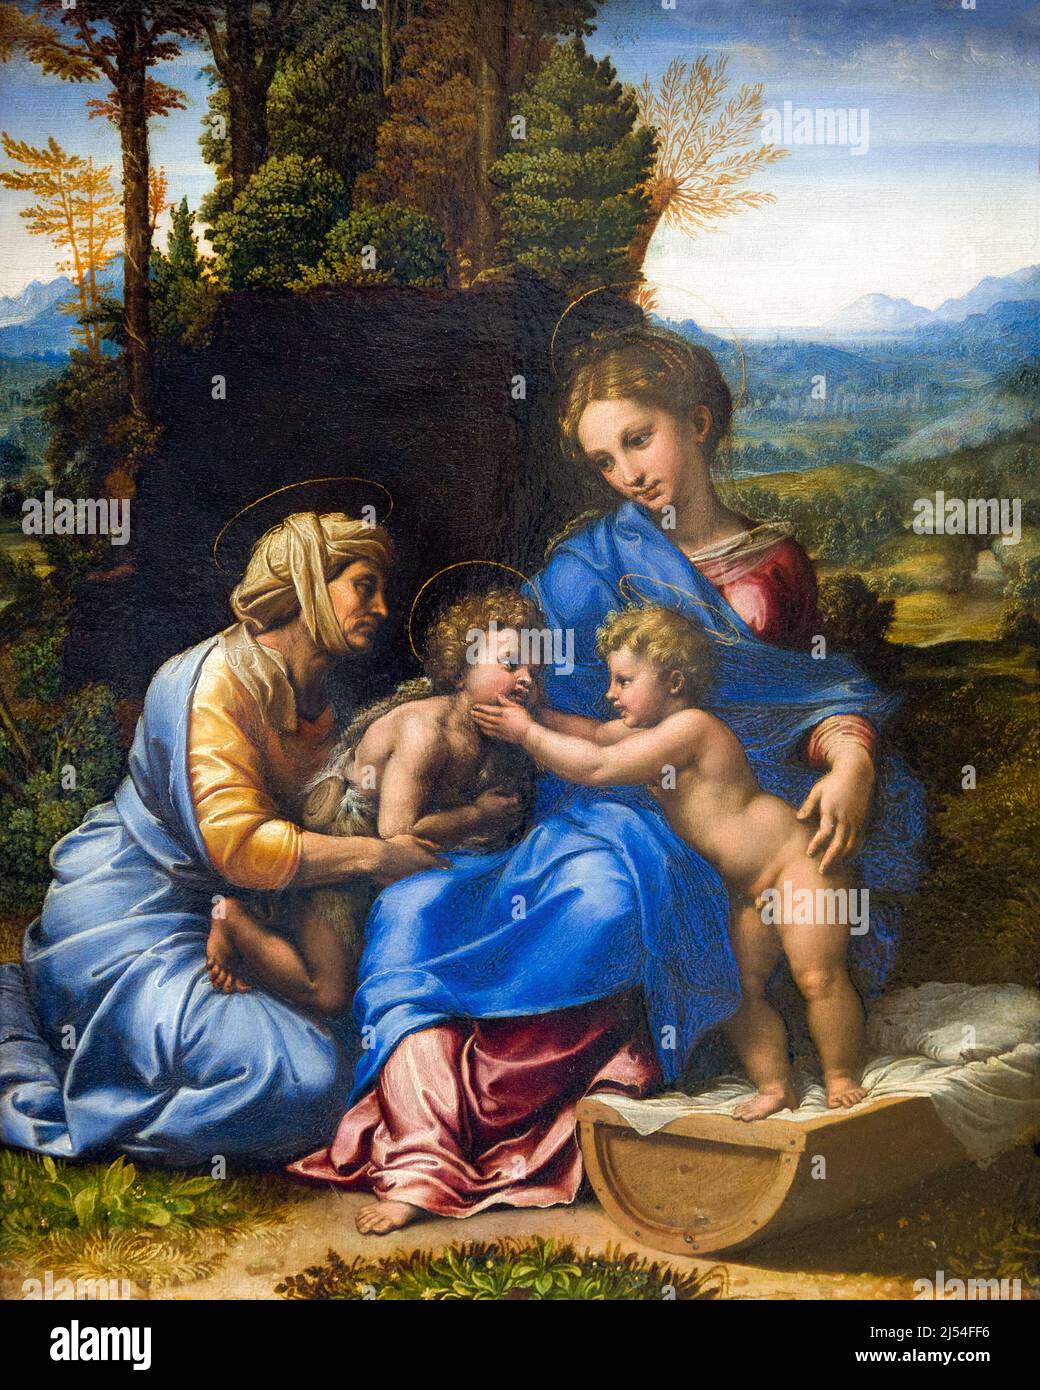 Holy Family with John the Baptist as a Boy and Saint Elizabeth, La Petite Sainte Famille, Giulio Romano, 1518-1519, Musee du Louvre, Paris, France, Eu Stock Photo